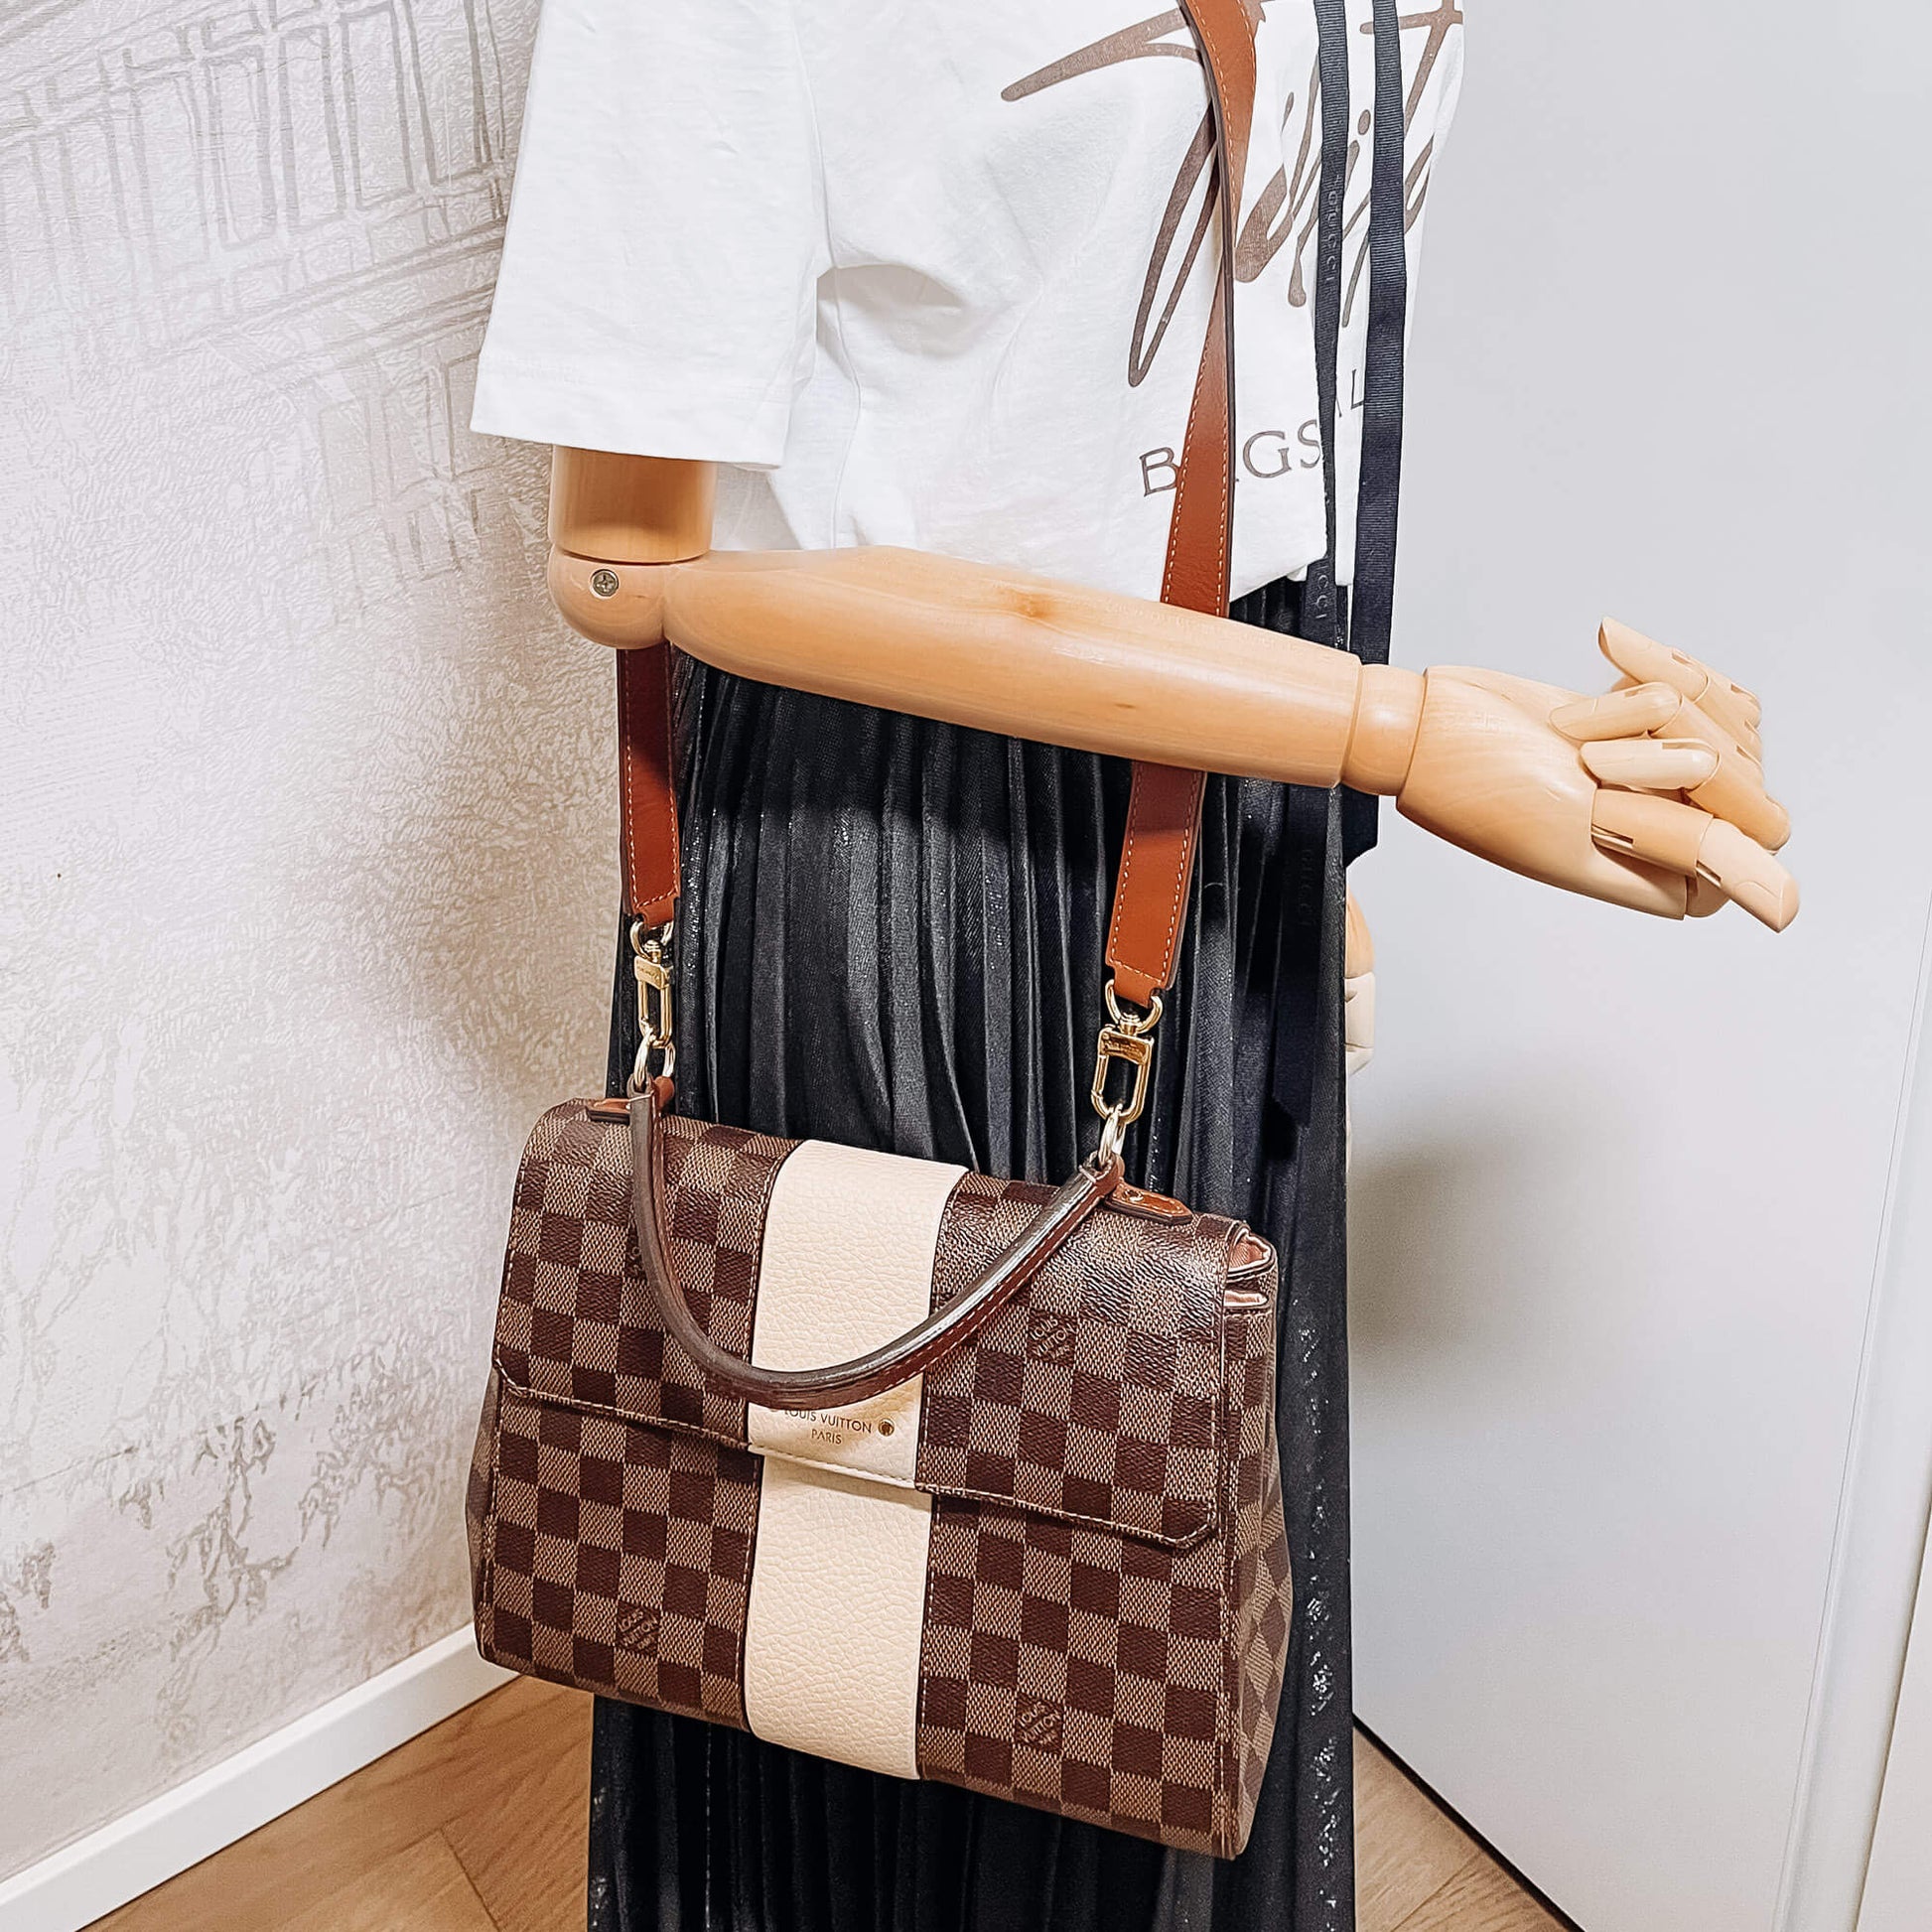 Louis Vuitton Bond Street Bag